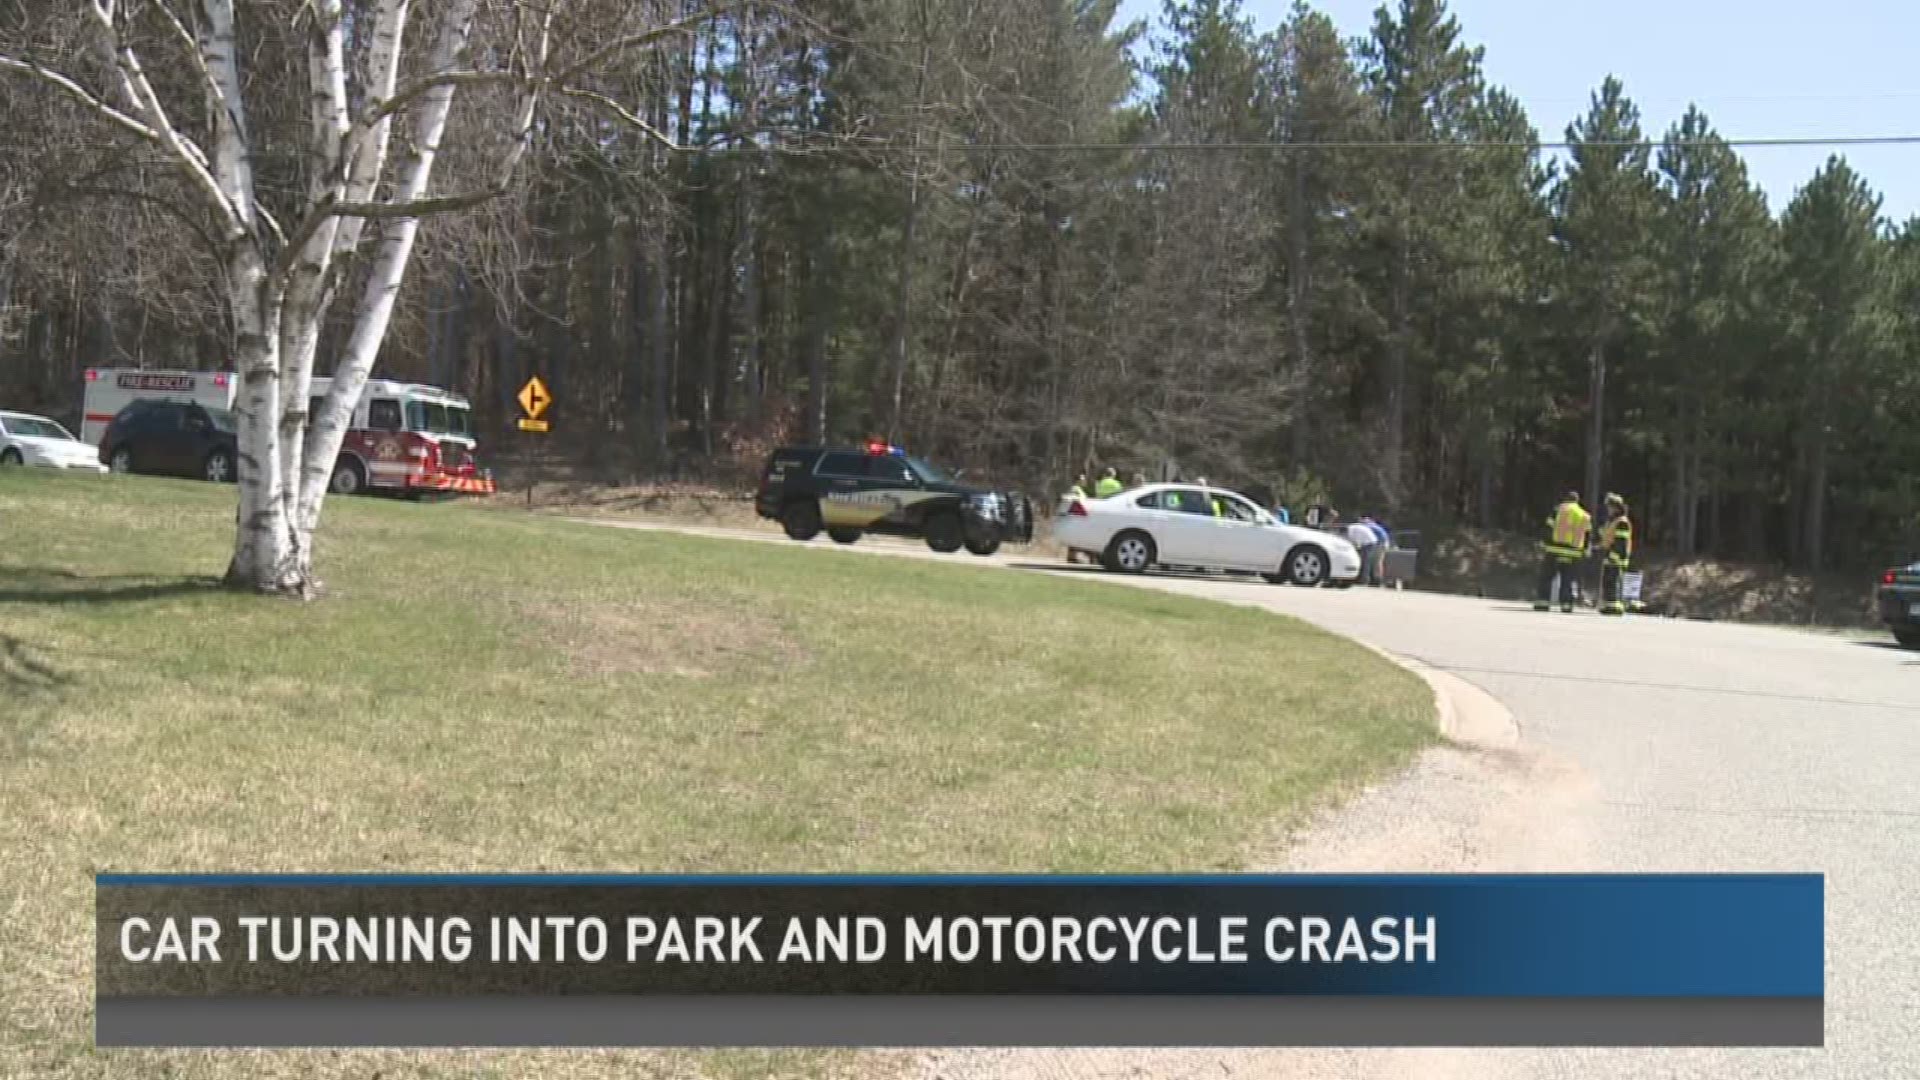 Motorcyclist unresponsive after crash, taken to hospital